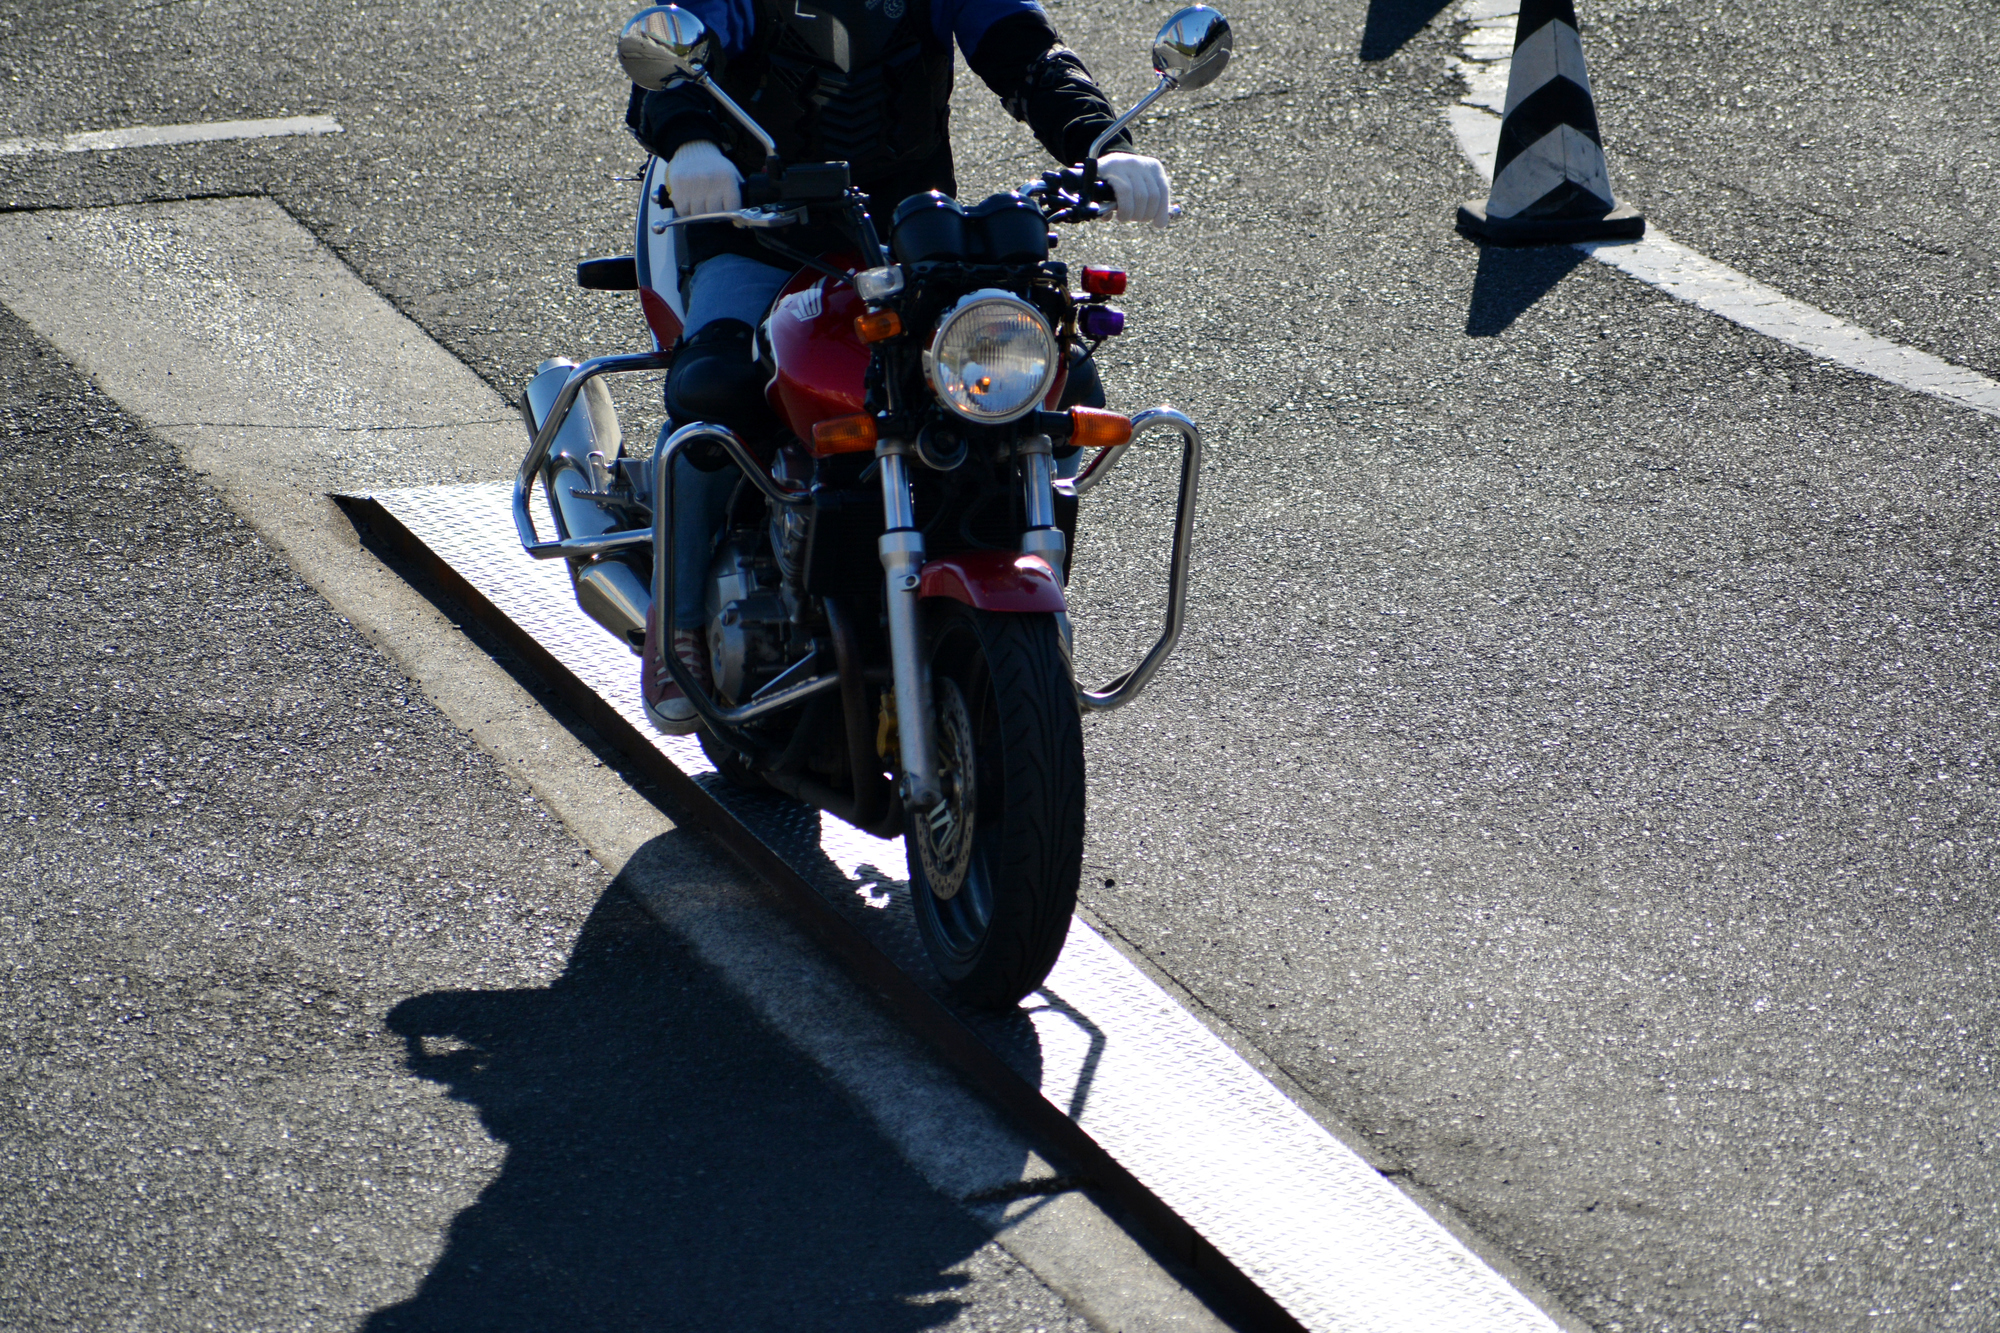 125ccバイク普通二輪免許取得の近道 武蔵境自動車教習所